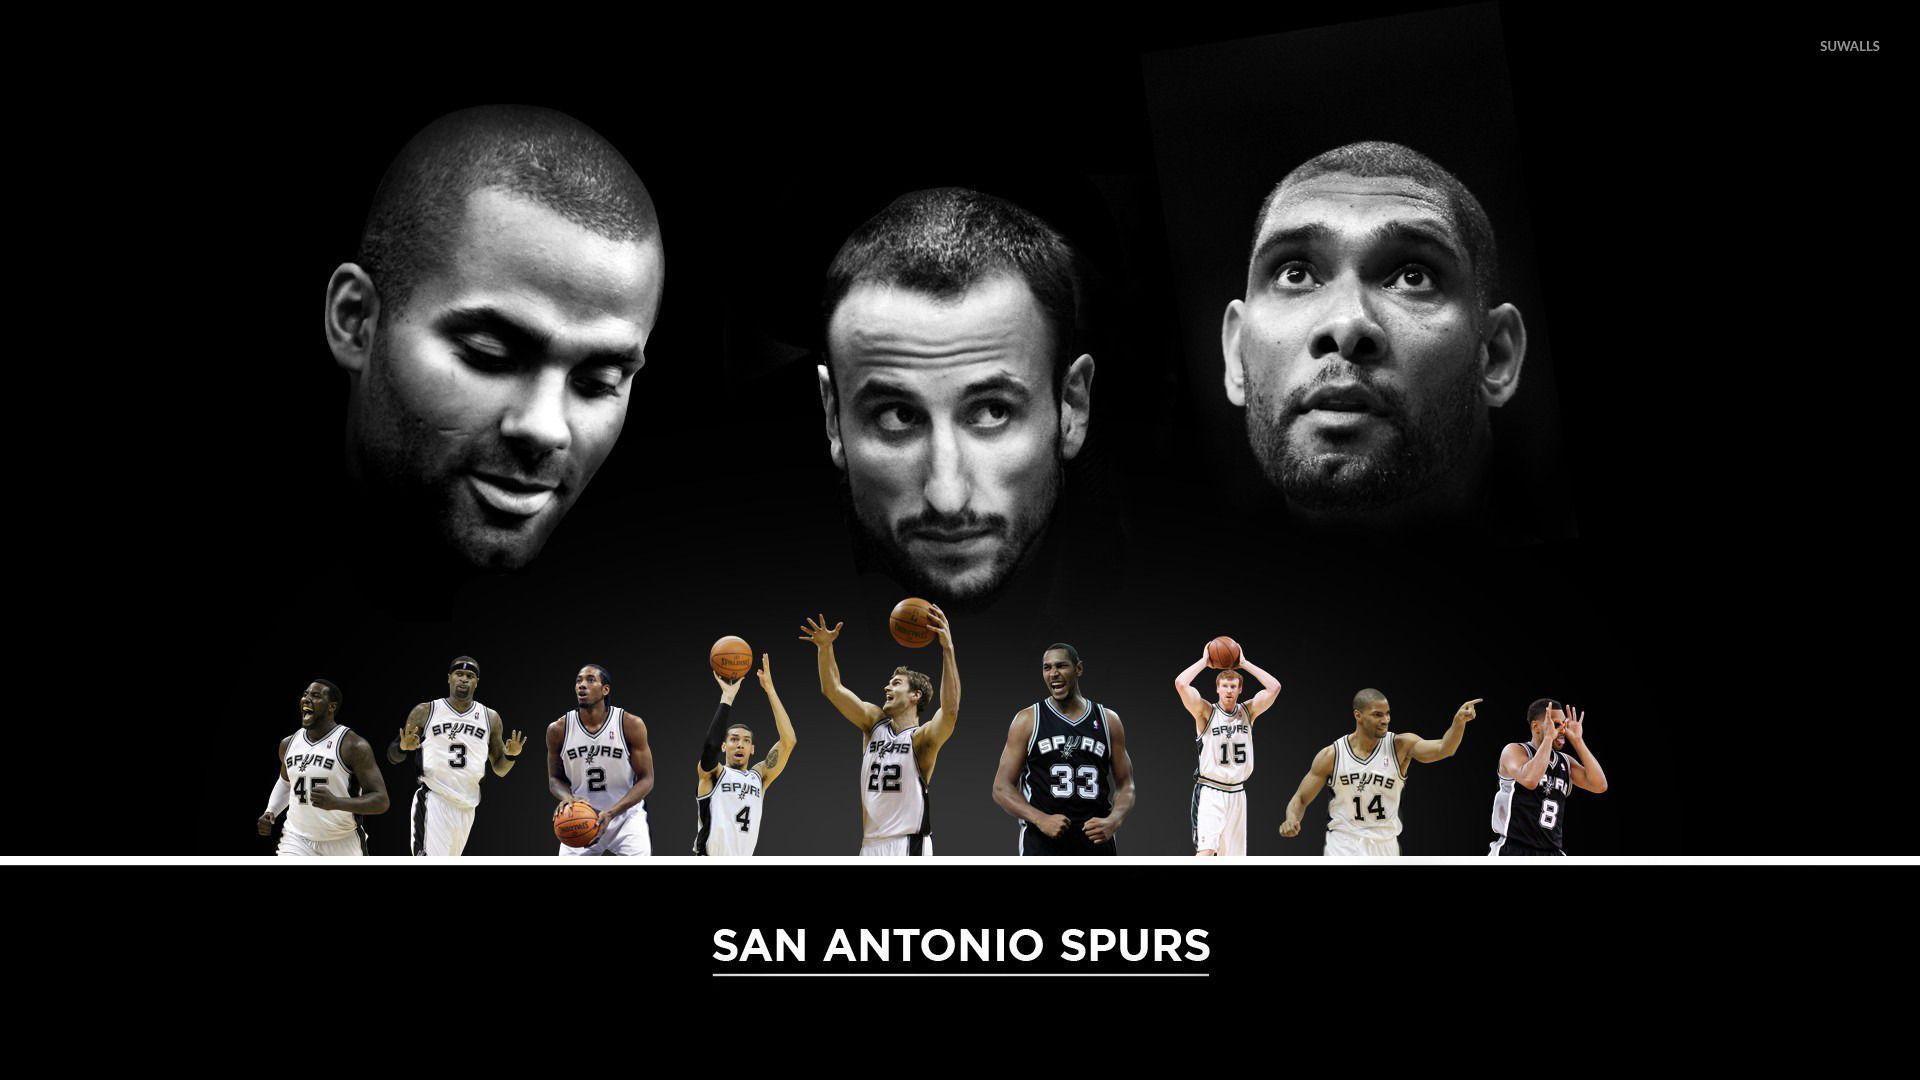 San Antonio Spurs wallpapers